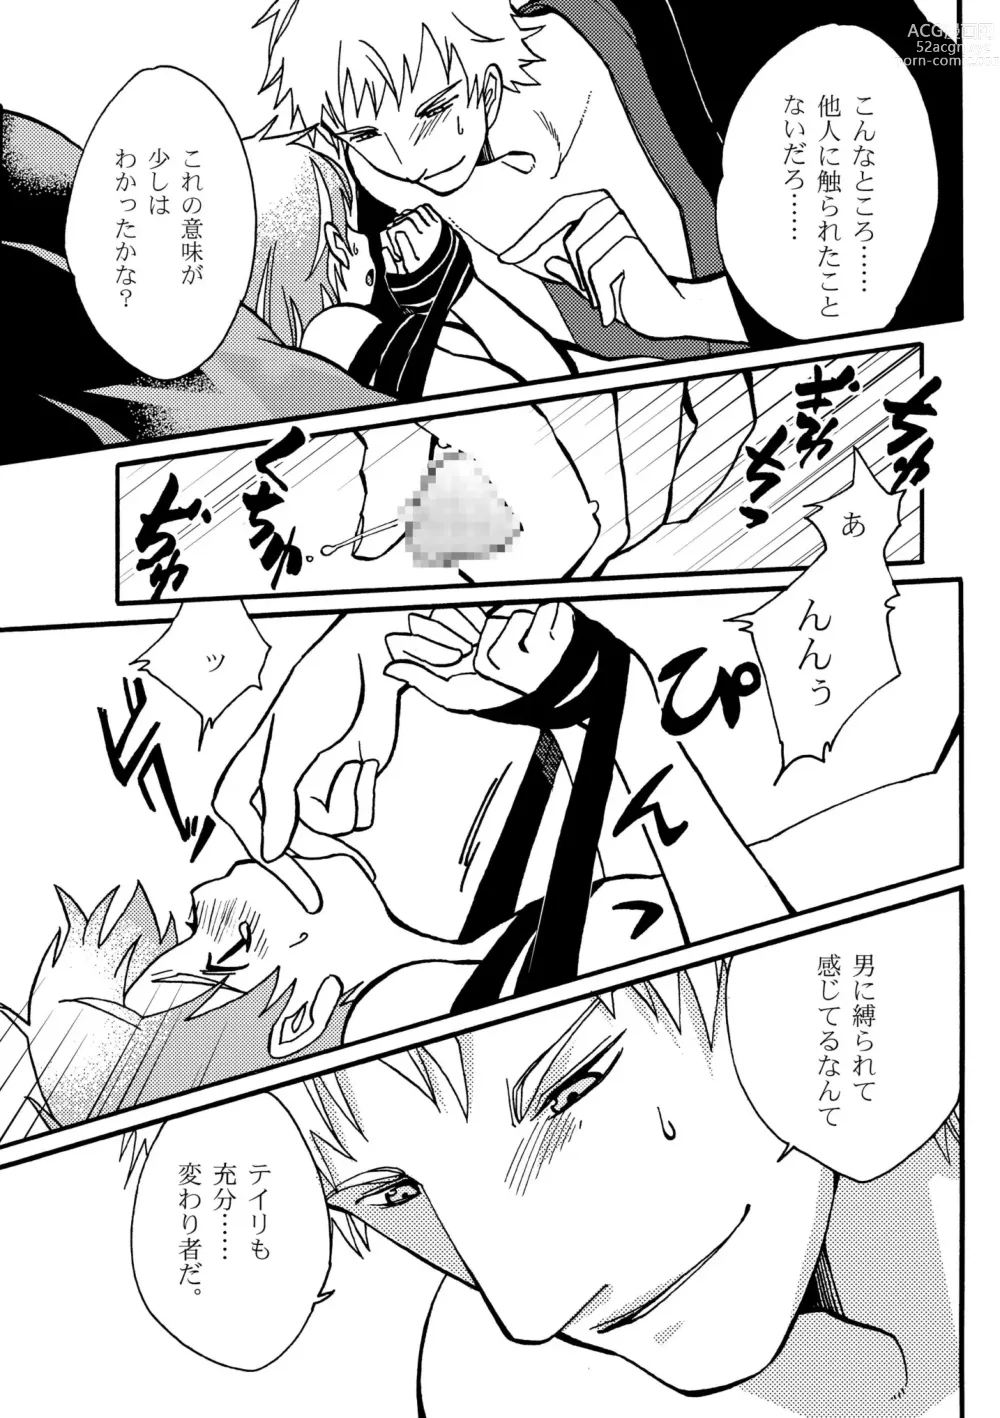 Page 11 of doujinshi Ame no Niwa